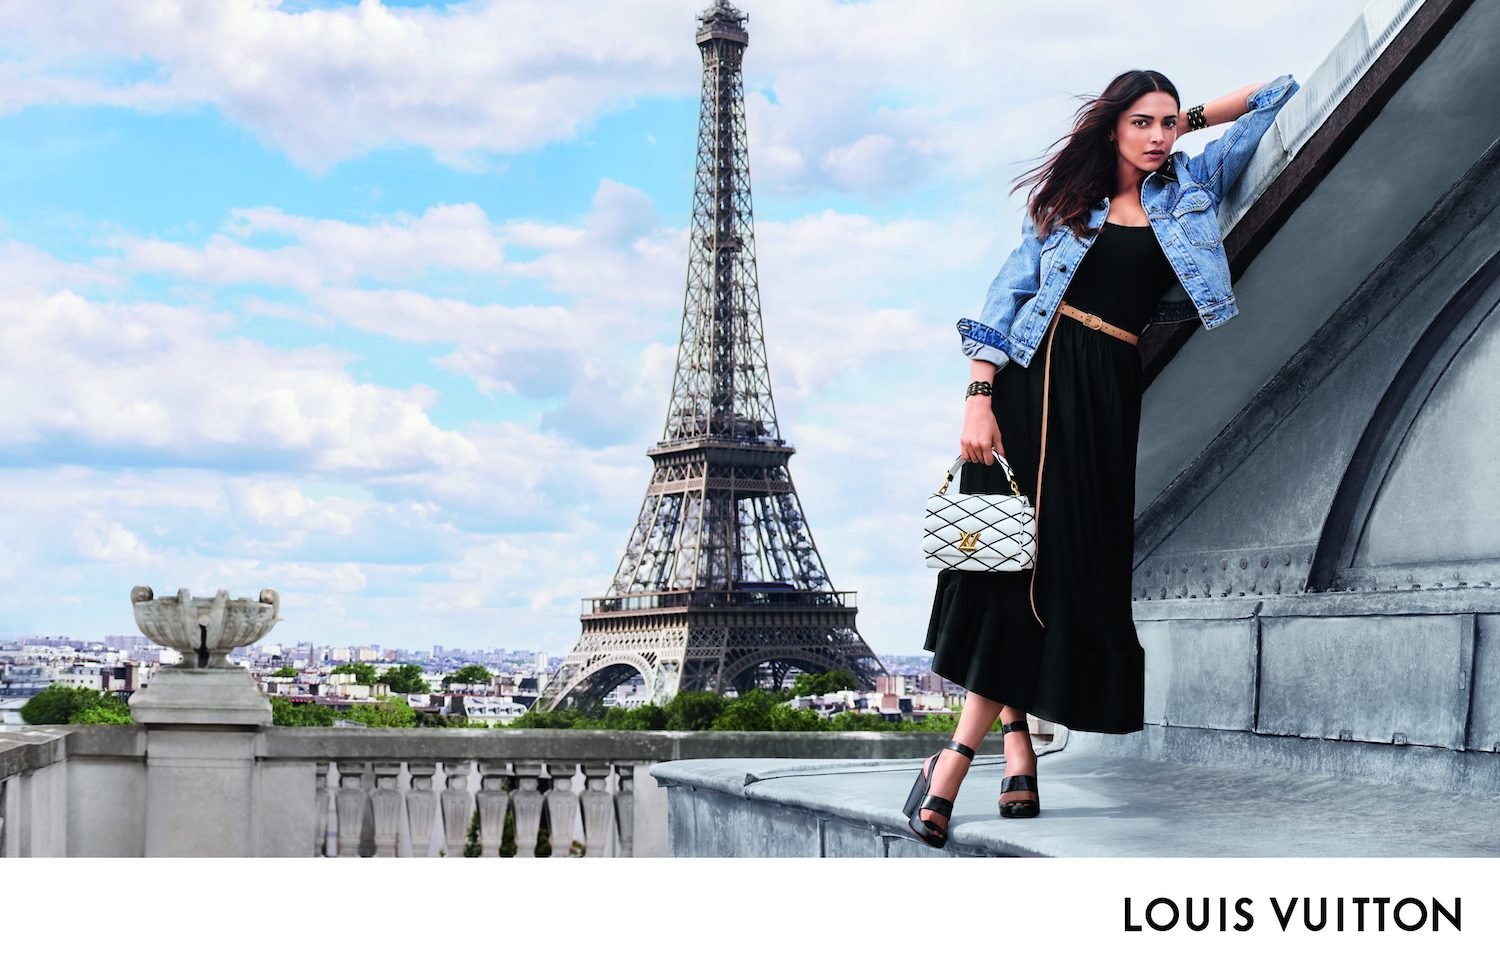 Louis Vuitton Fall 2022 Campaign Film